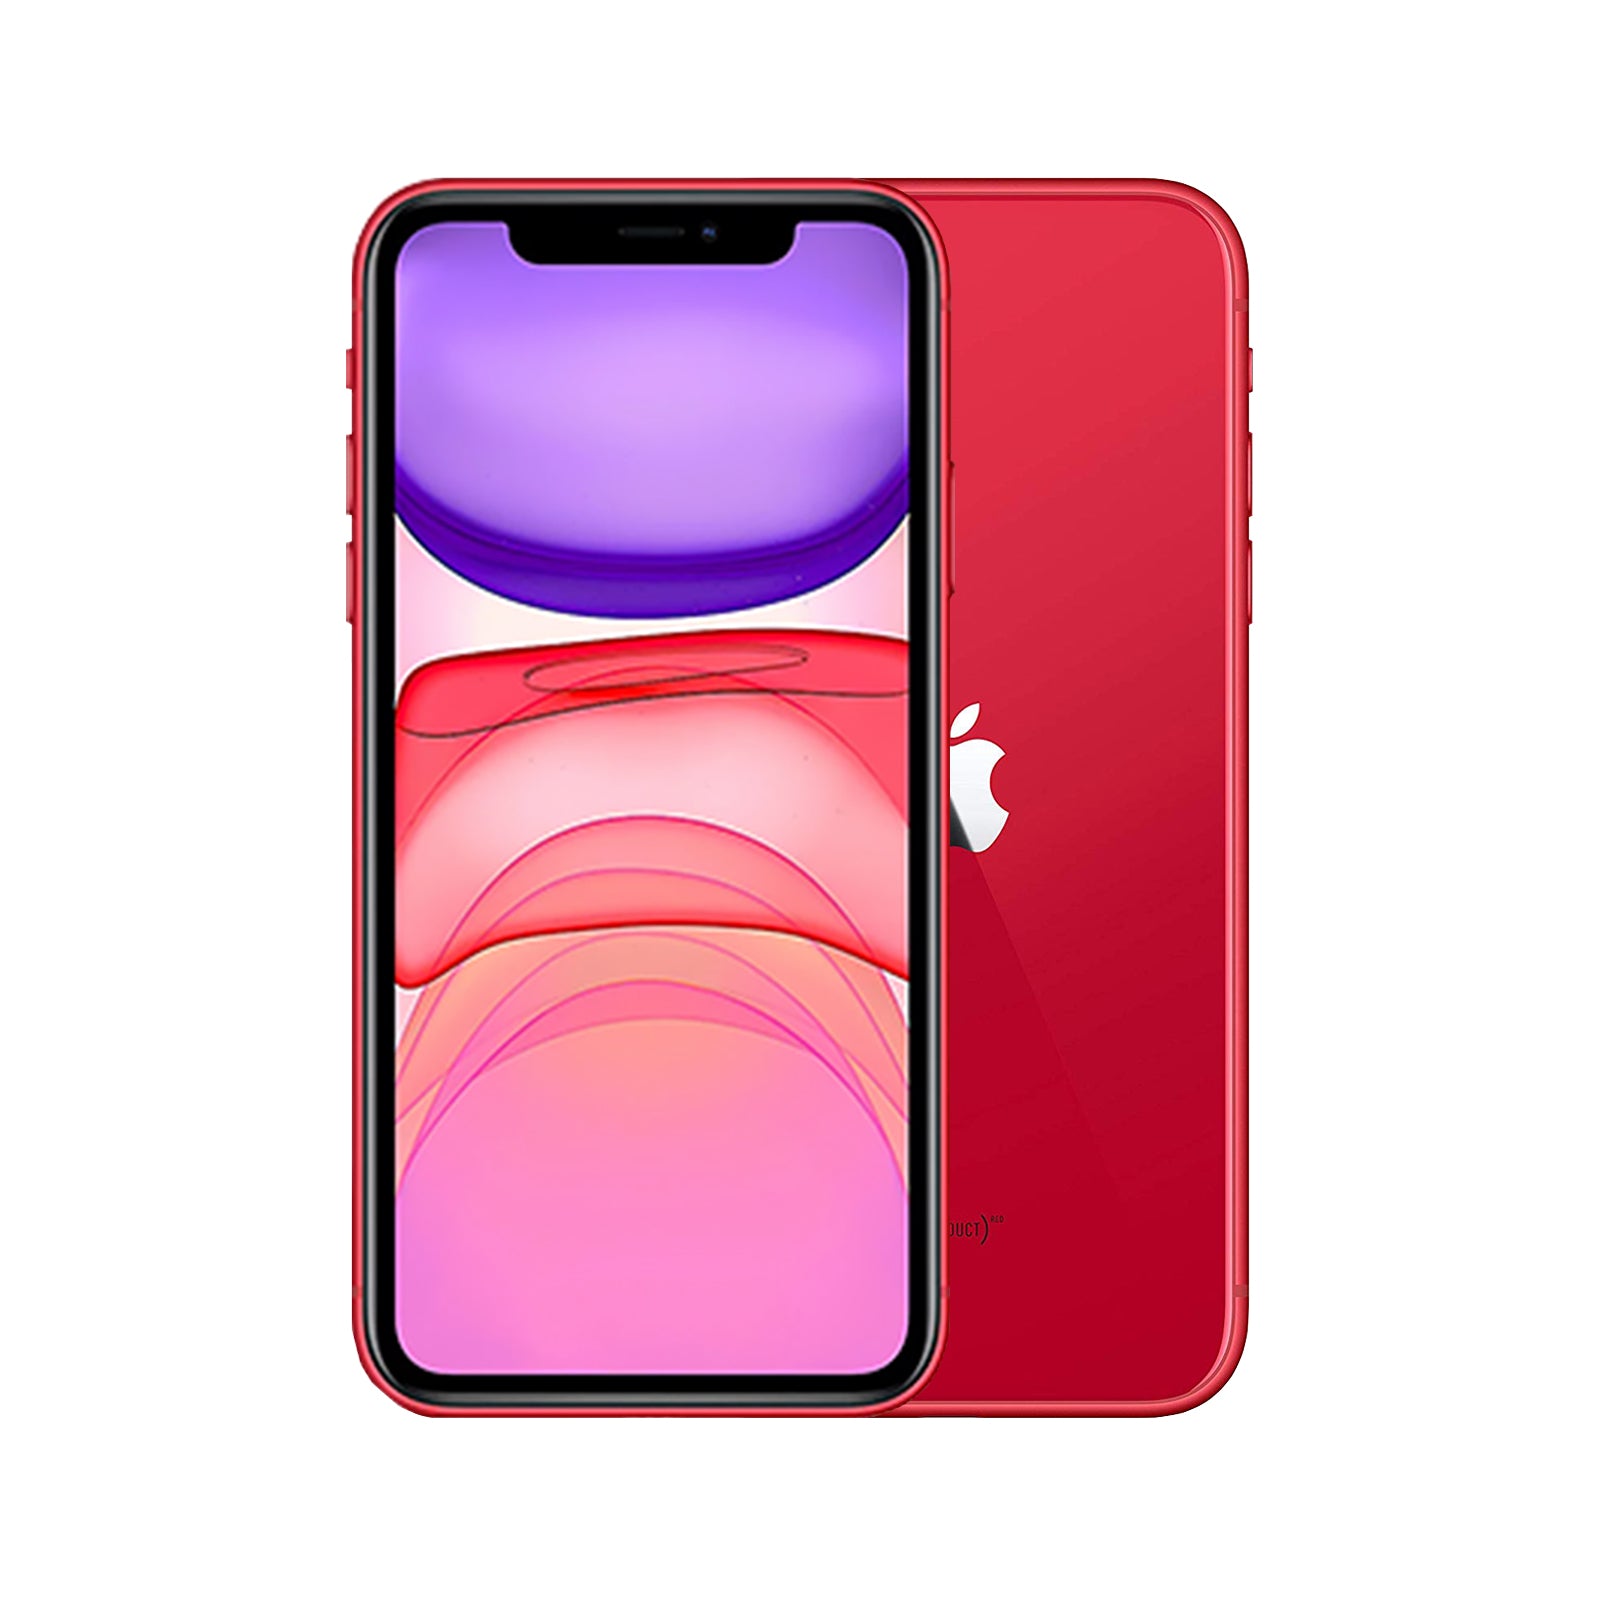 Apple iPhone 11 64GB Red - Very Good - Refurbished